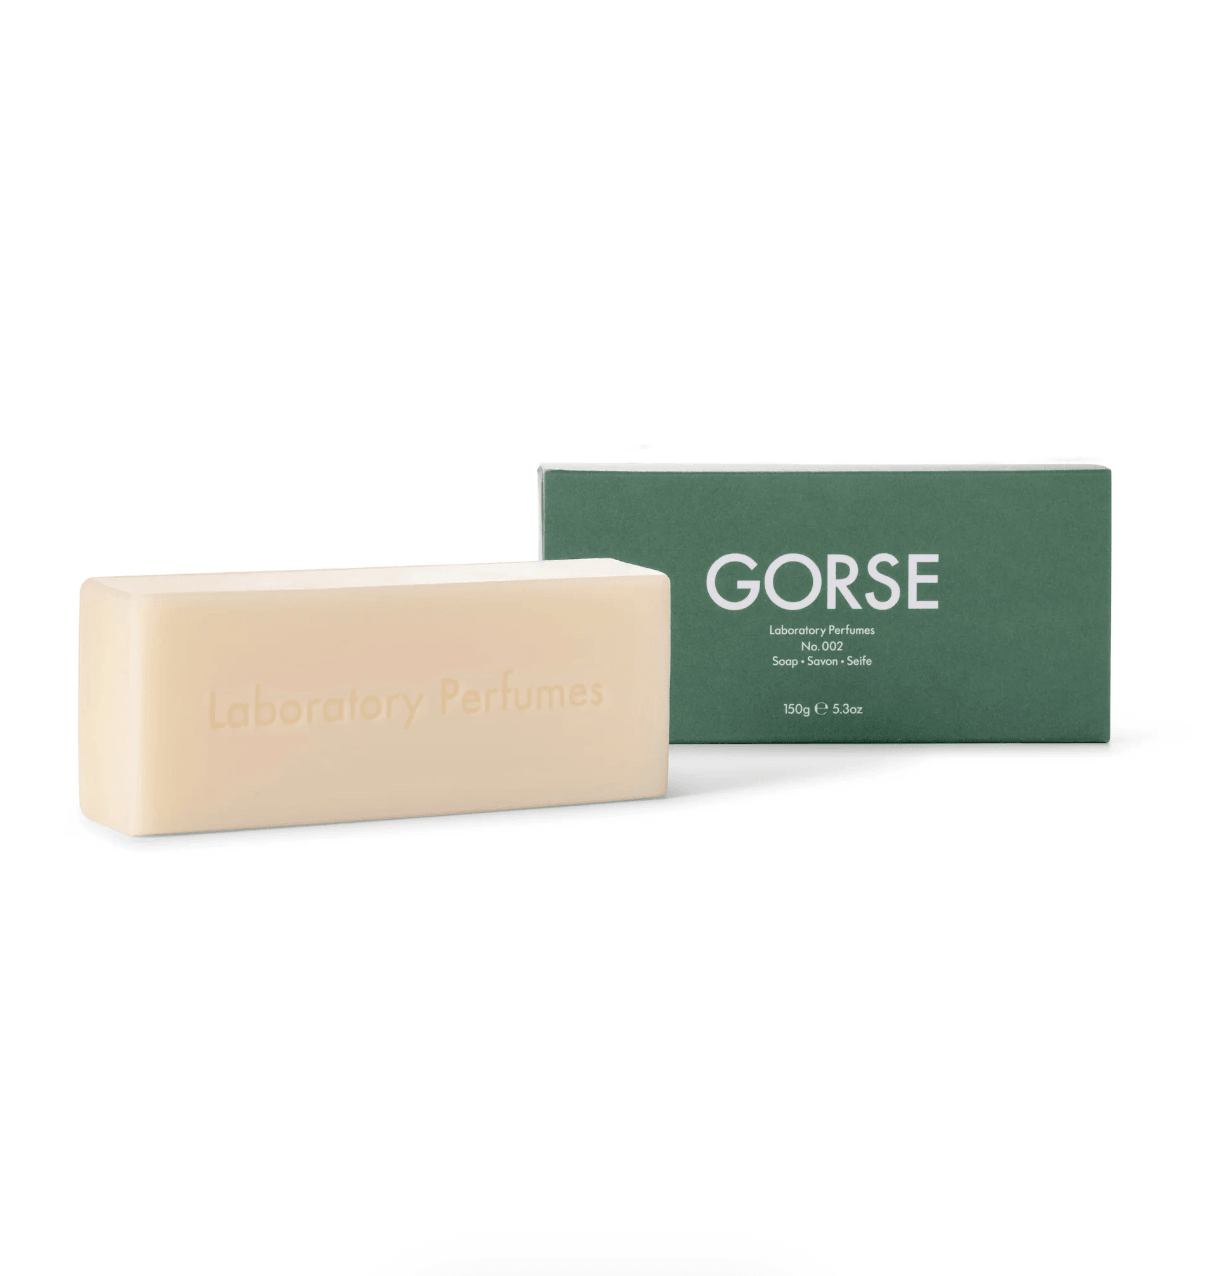 Laboratory Perfumes - Gorse Soap Bar - 32 The Guild